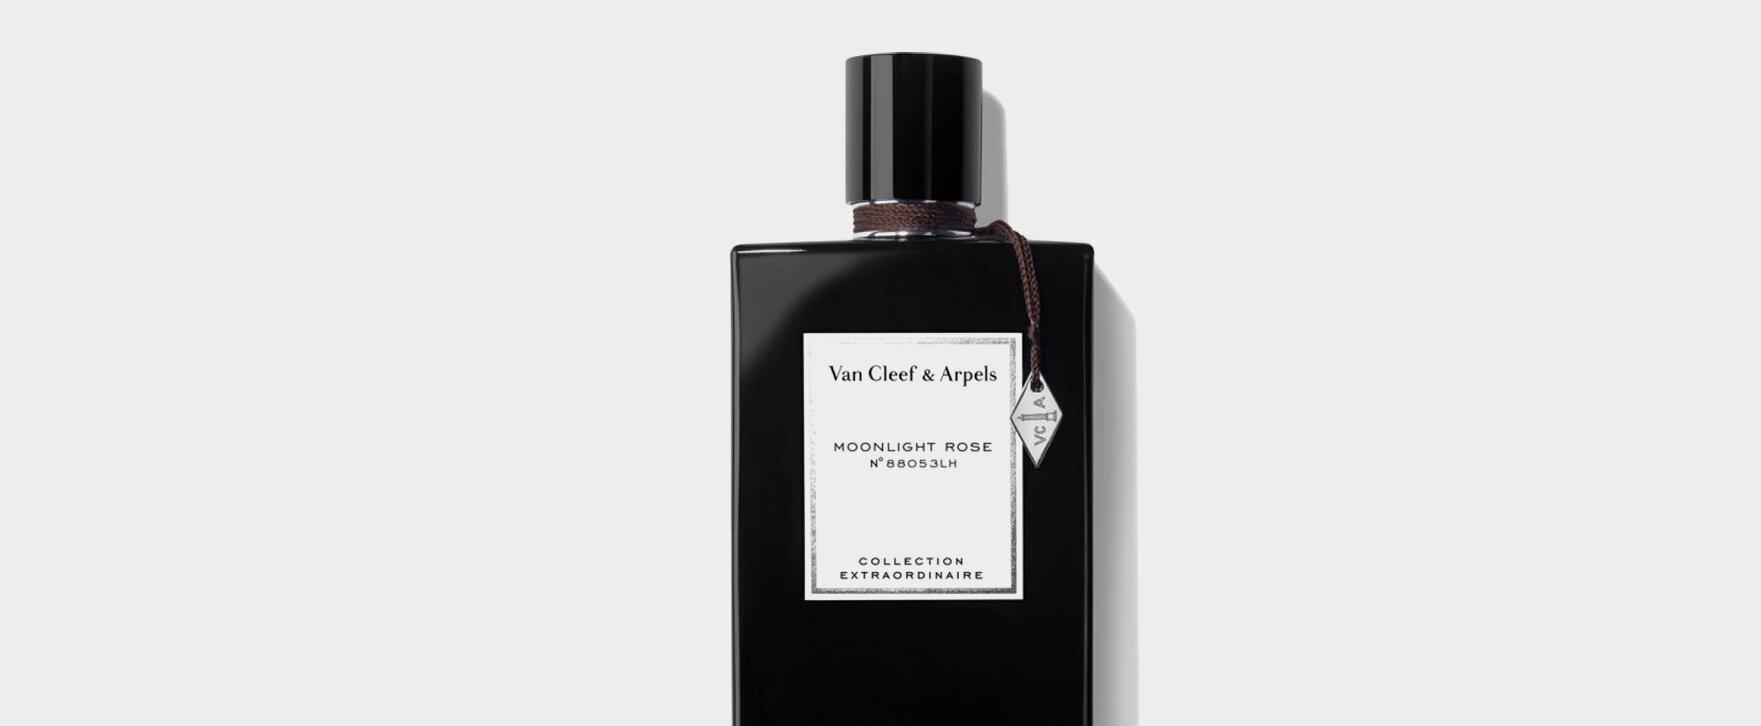 Van Cleef & Arpels präsentiert neuen Unisexduft „Moonlight Rose“ aus der „Collection Extraordinaire“